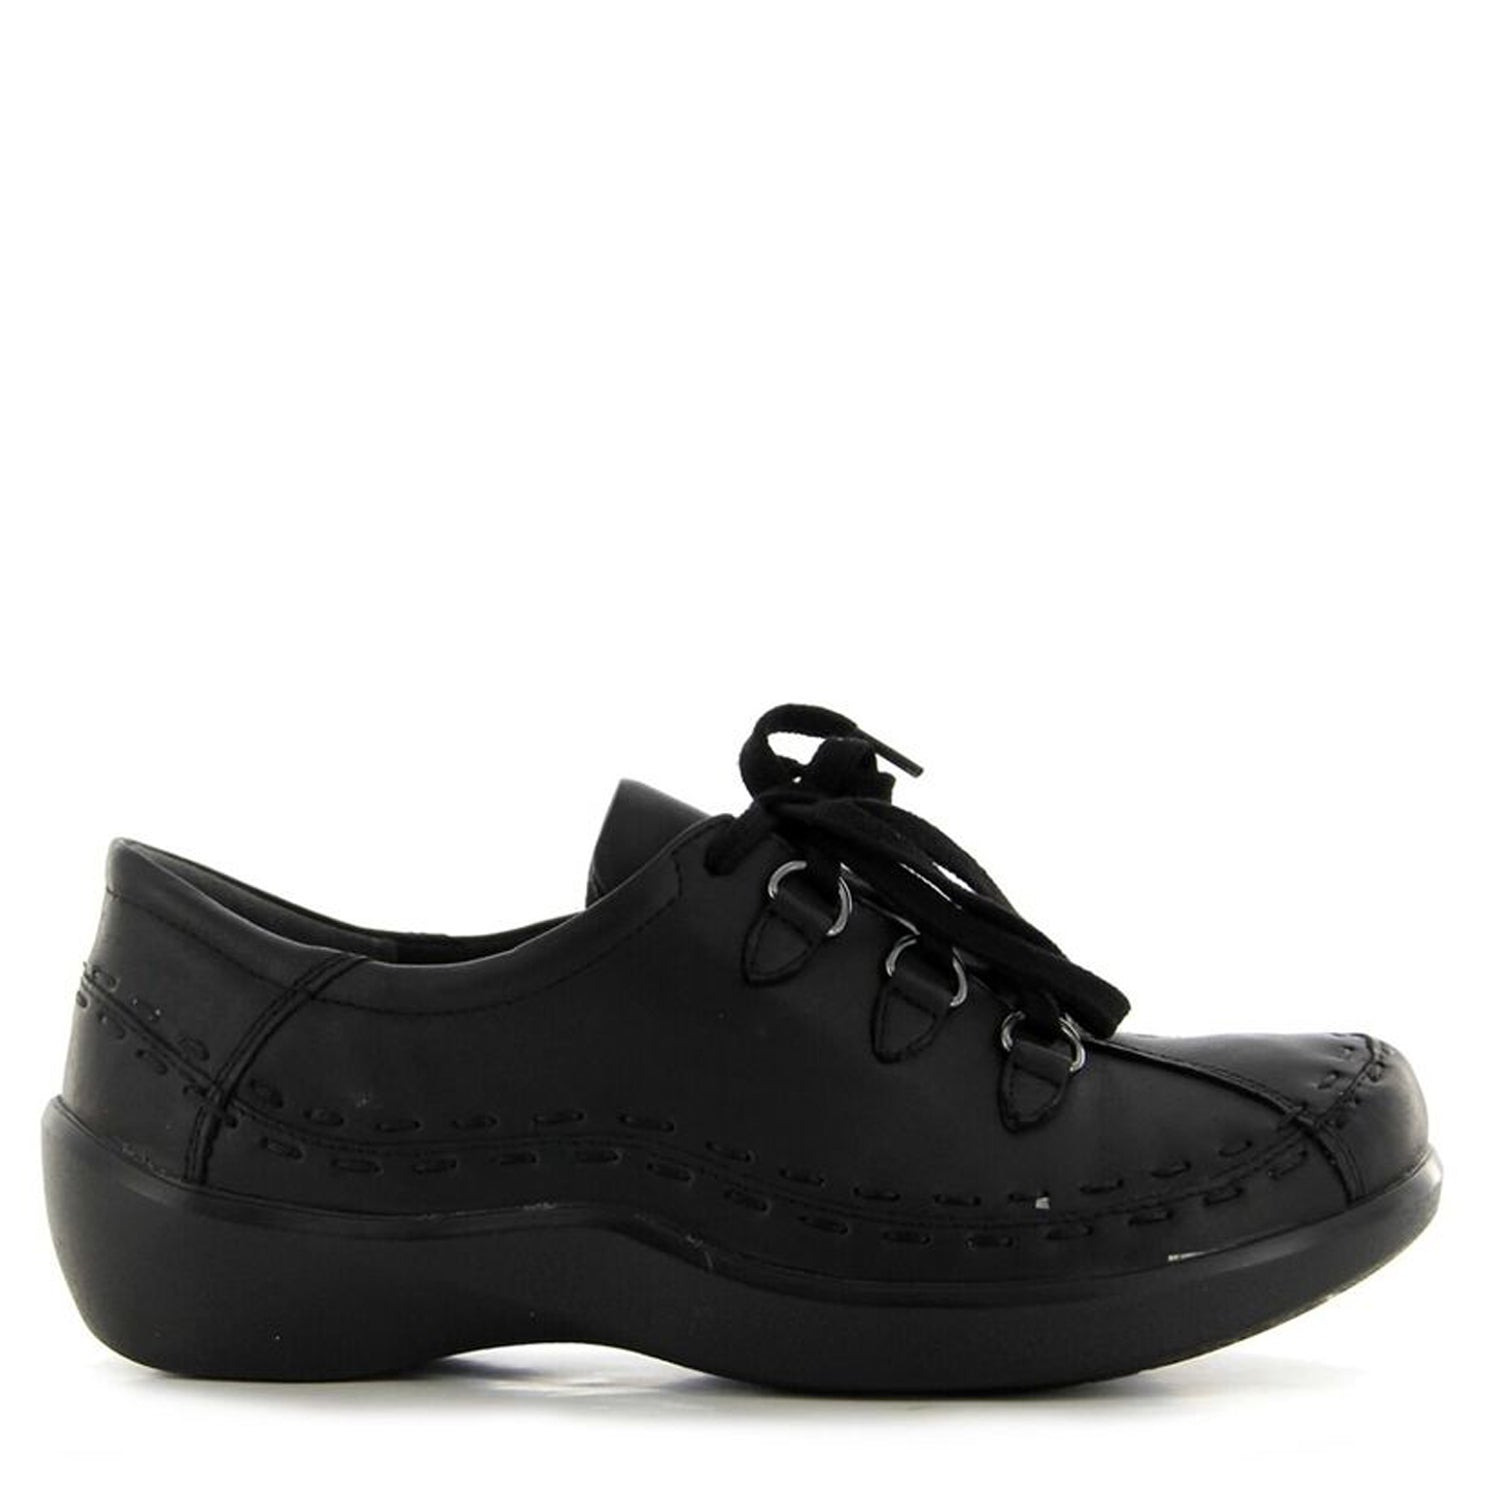 Shop ALLSORTS XW - BLACK by ZIERA - Ian's Shoes for Women